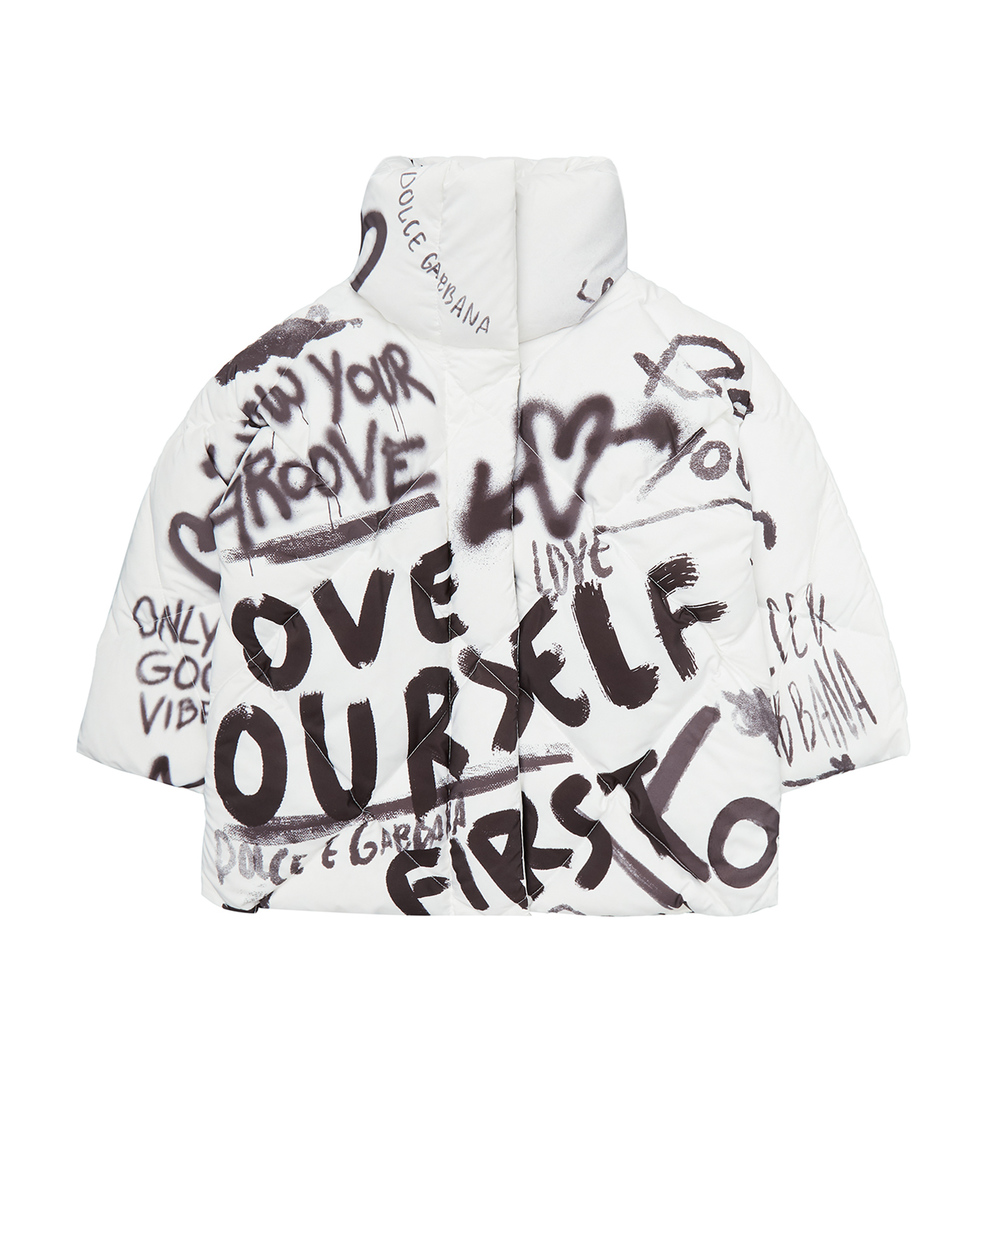 Пуховик Dolce&Gabbana Kids L5JBJY-G7BFK-S, белый цвет • Купить в интернет-магазине Kameron